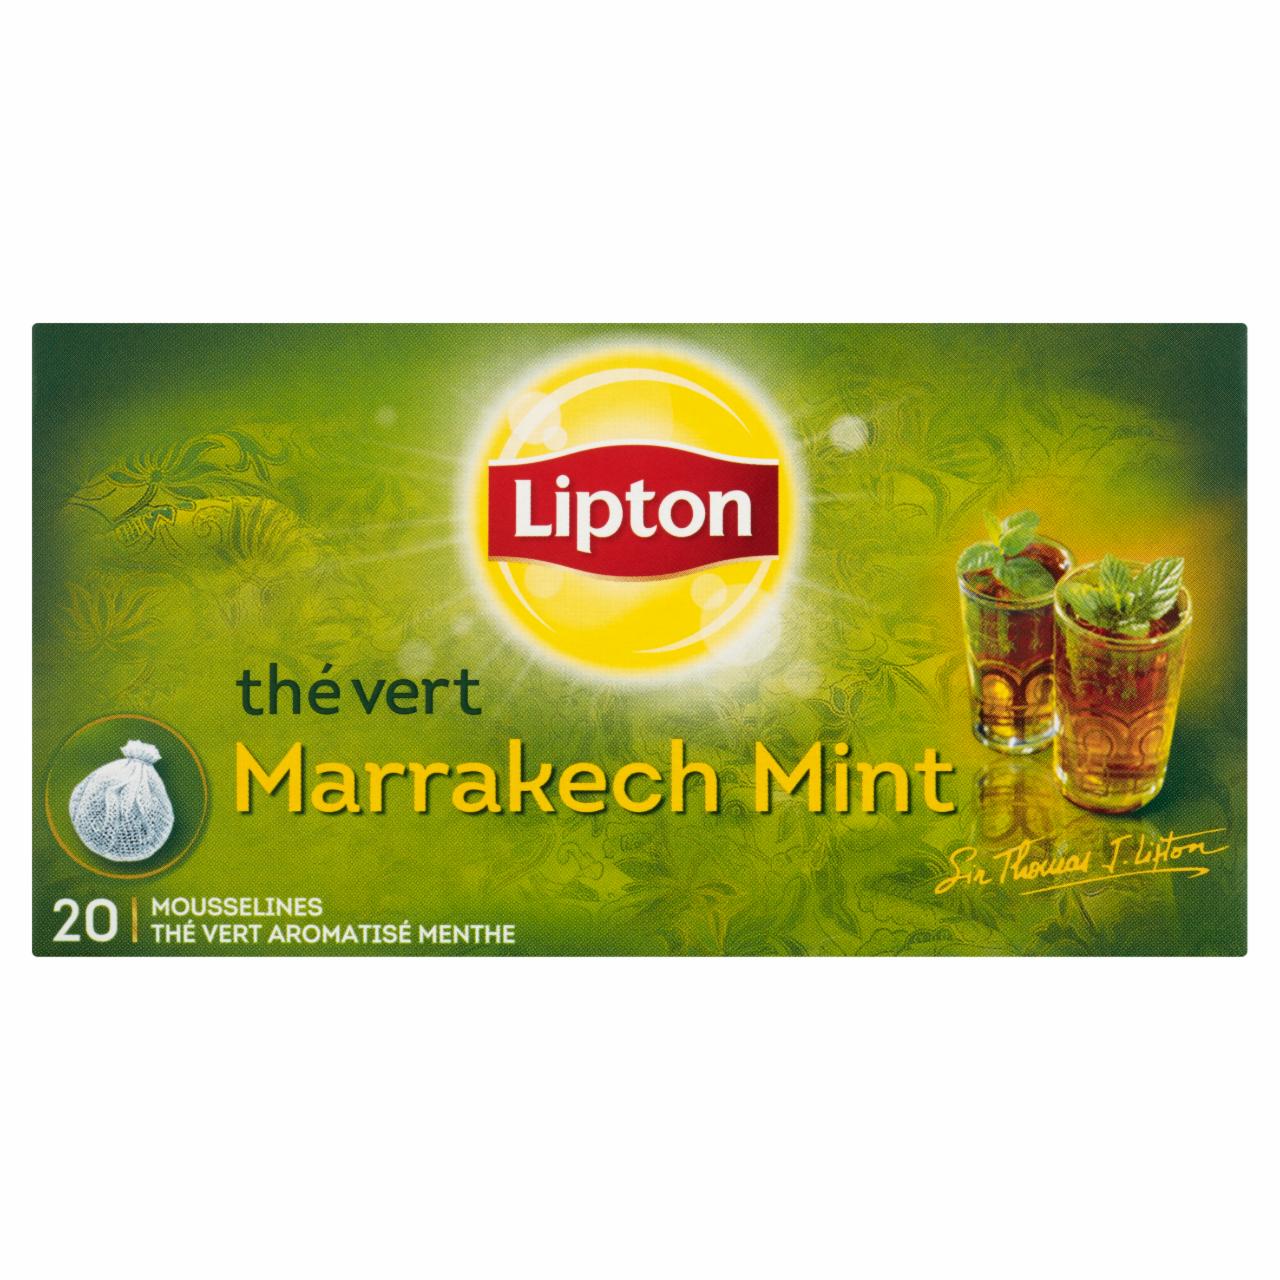 Zdjęcia - Lipton Marrakech Mint Herbata zielona aromatyzowana 40 g (20 torebek)